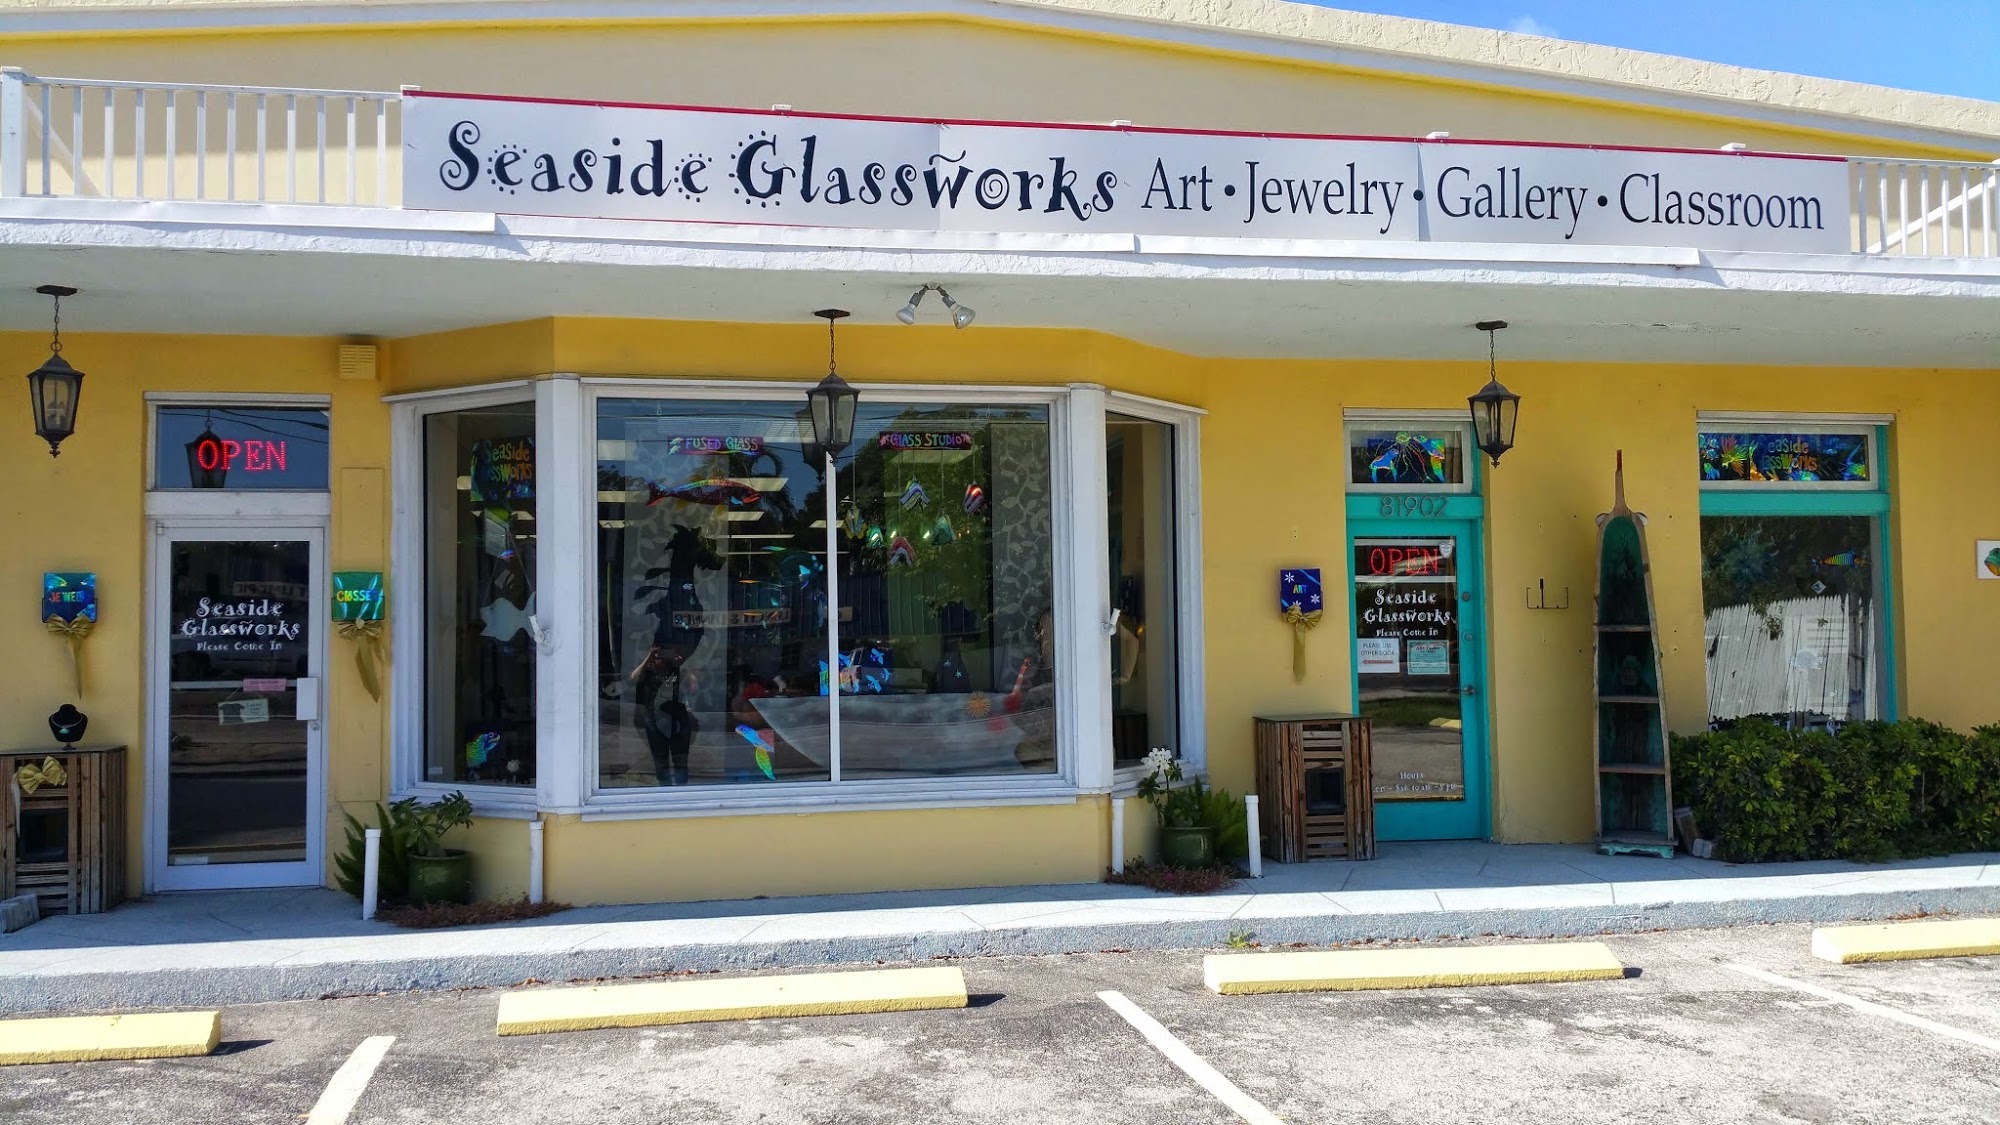 Seaside Glassworks